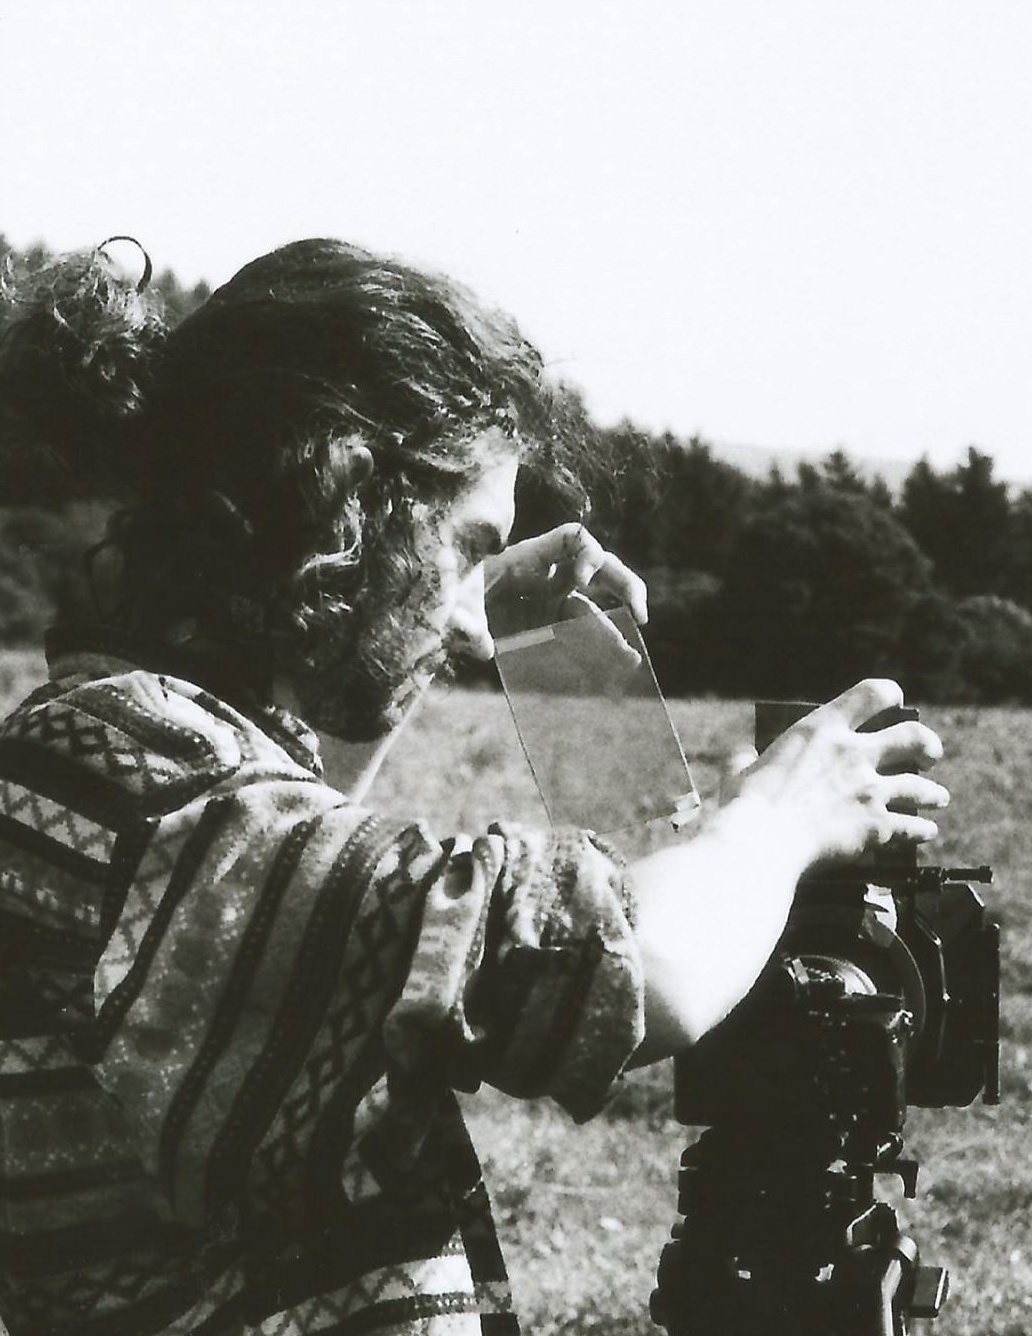 Scott loads a glass filter into a camera, black and white